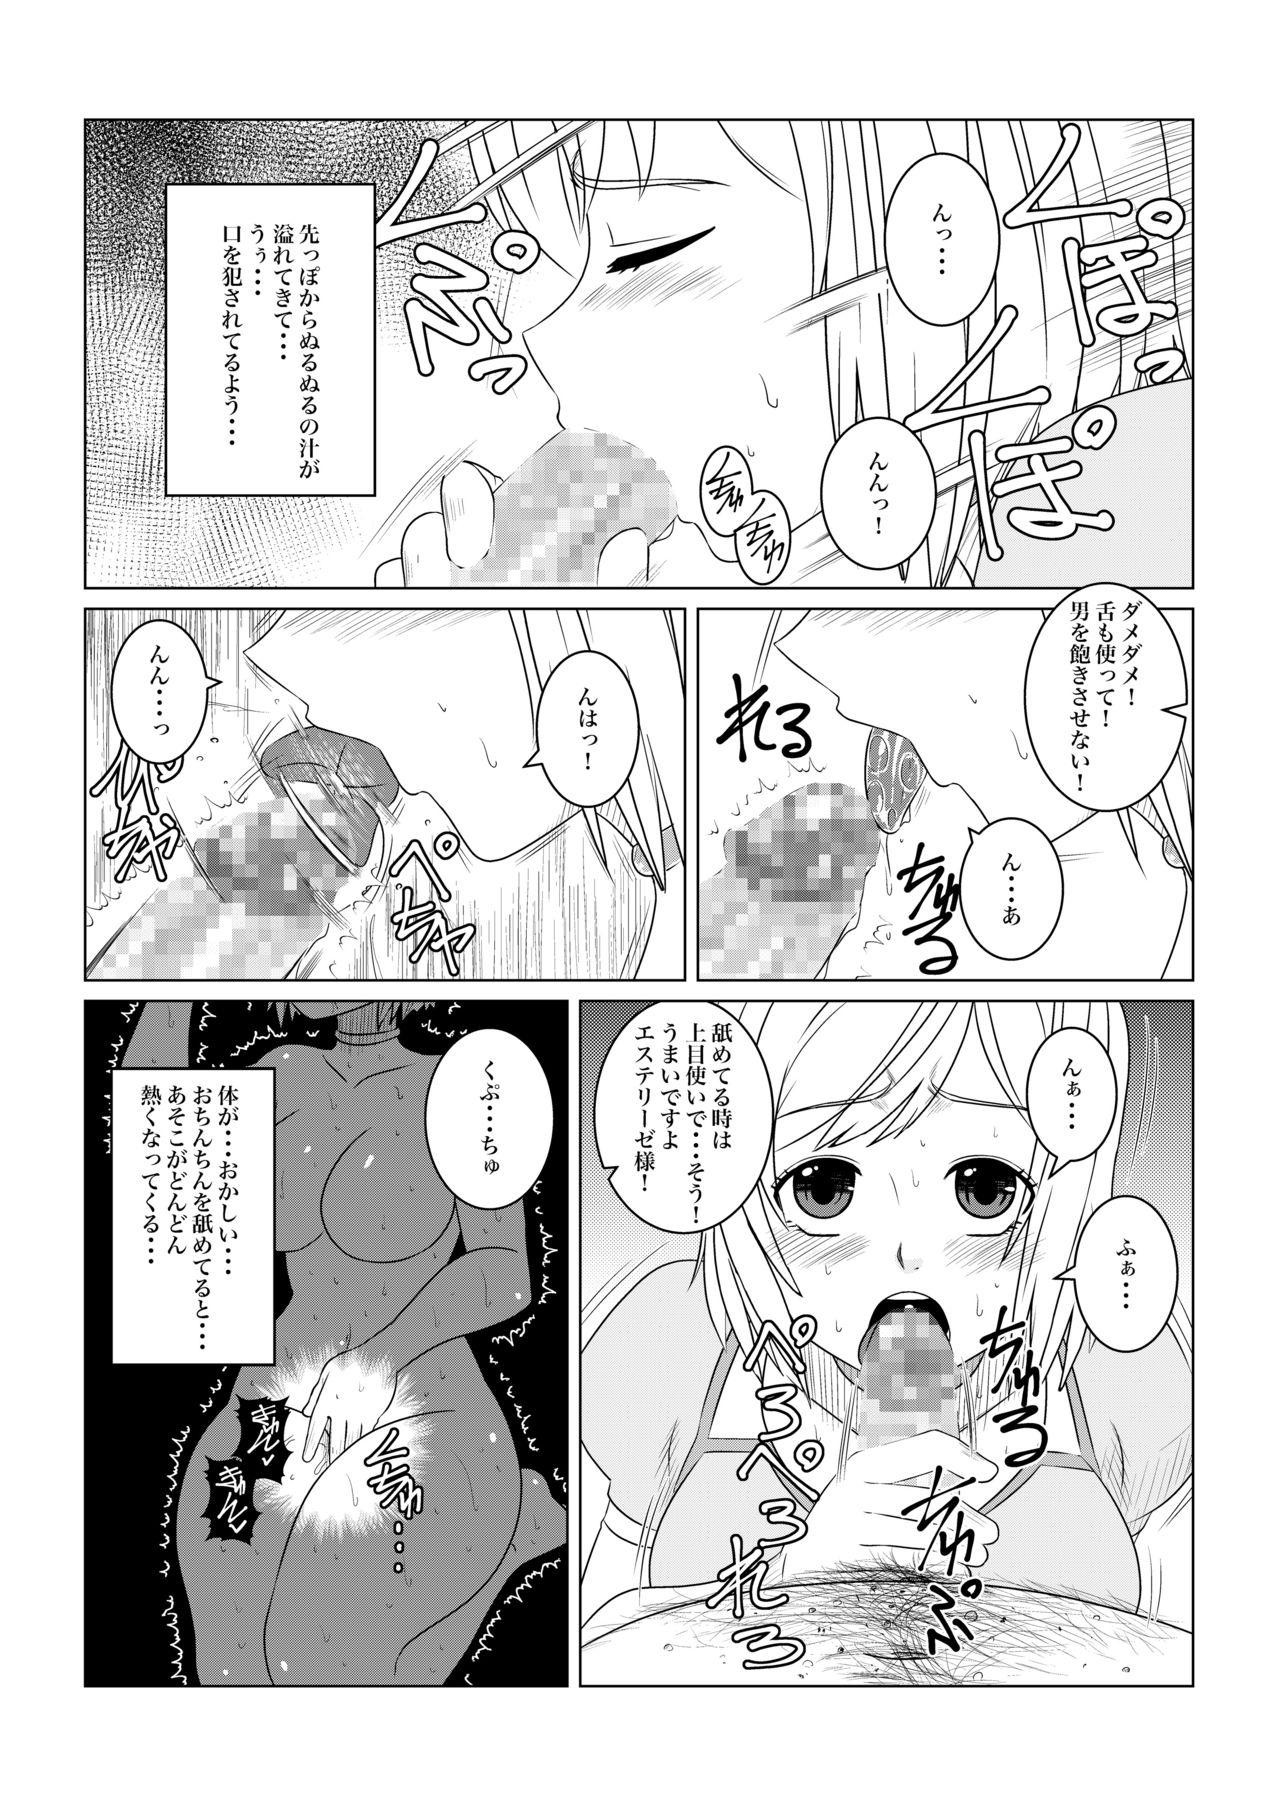 Work Gekka Midarezaki - Tales of vesperia Masturbacion - Page 11